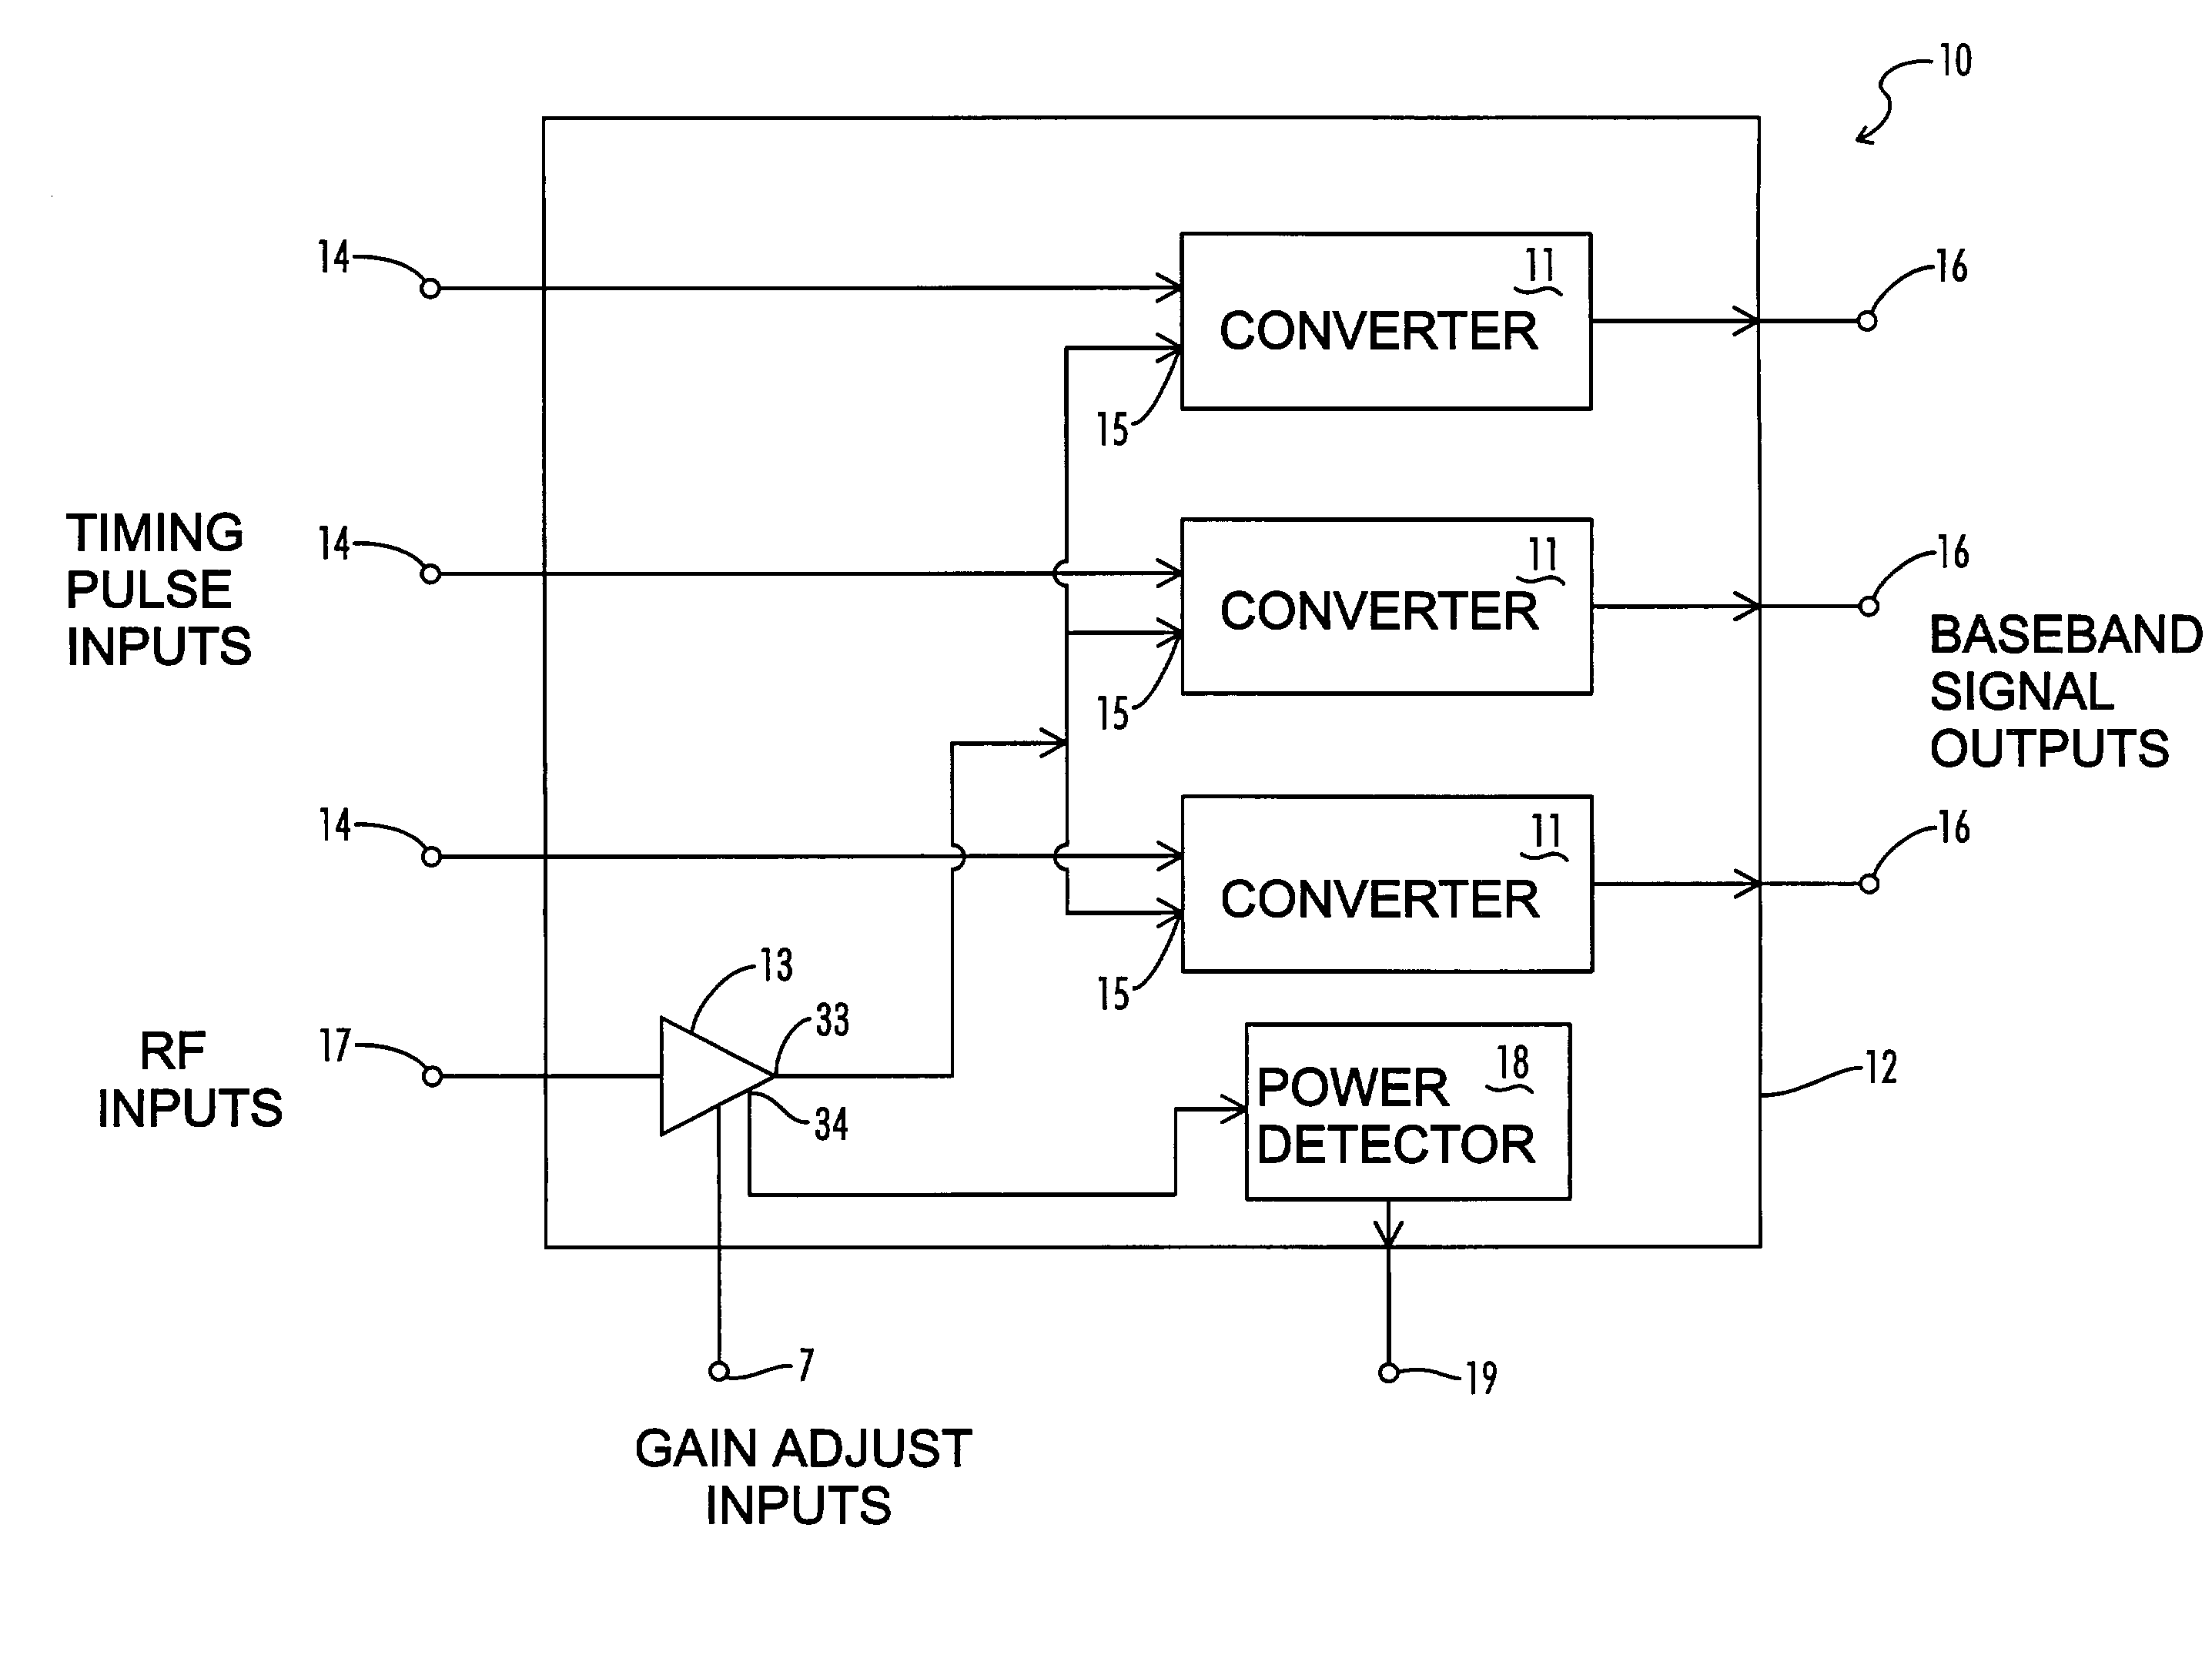 Baseband signal converter for a wideband impulse radio receiver